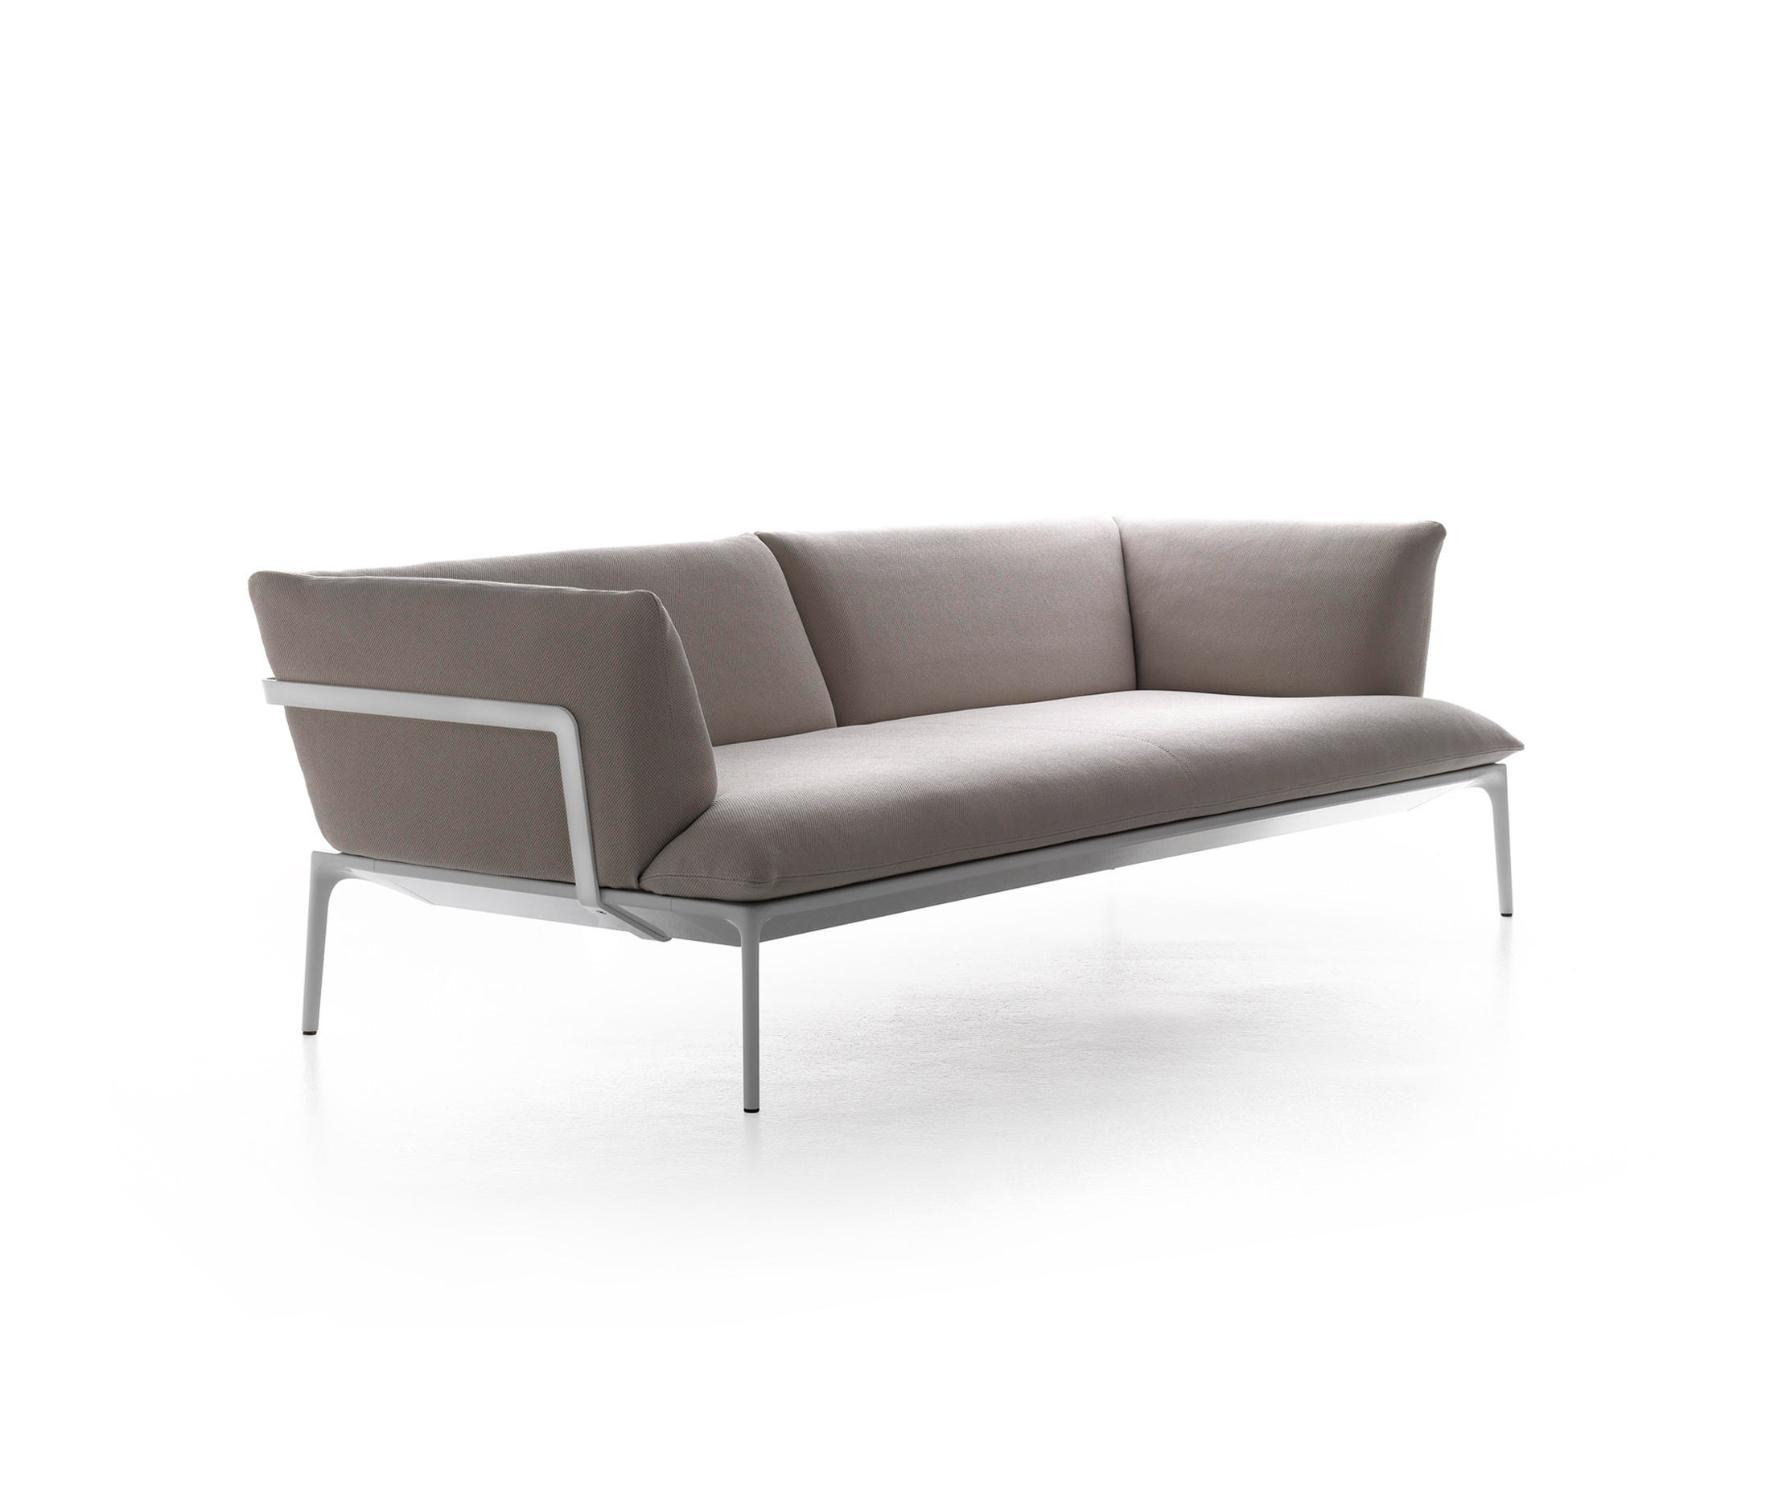 Yale Italian Sofa ☞ Dimensions: Length 220 cm